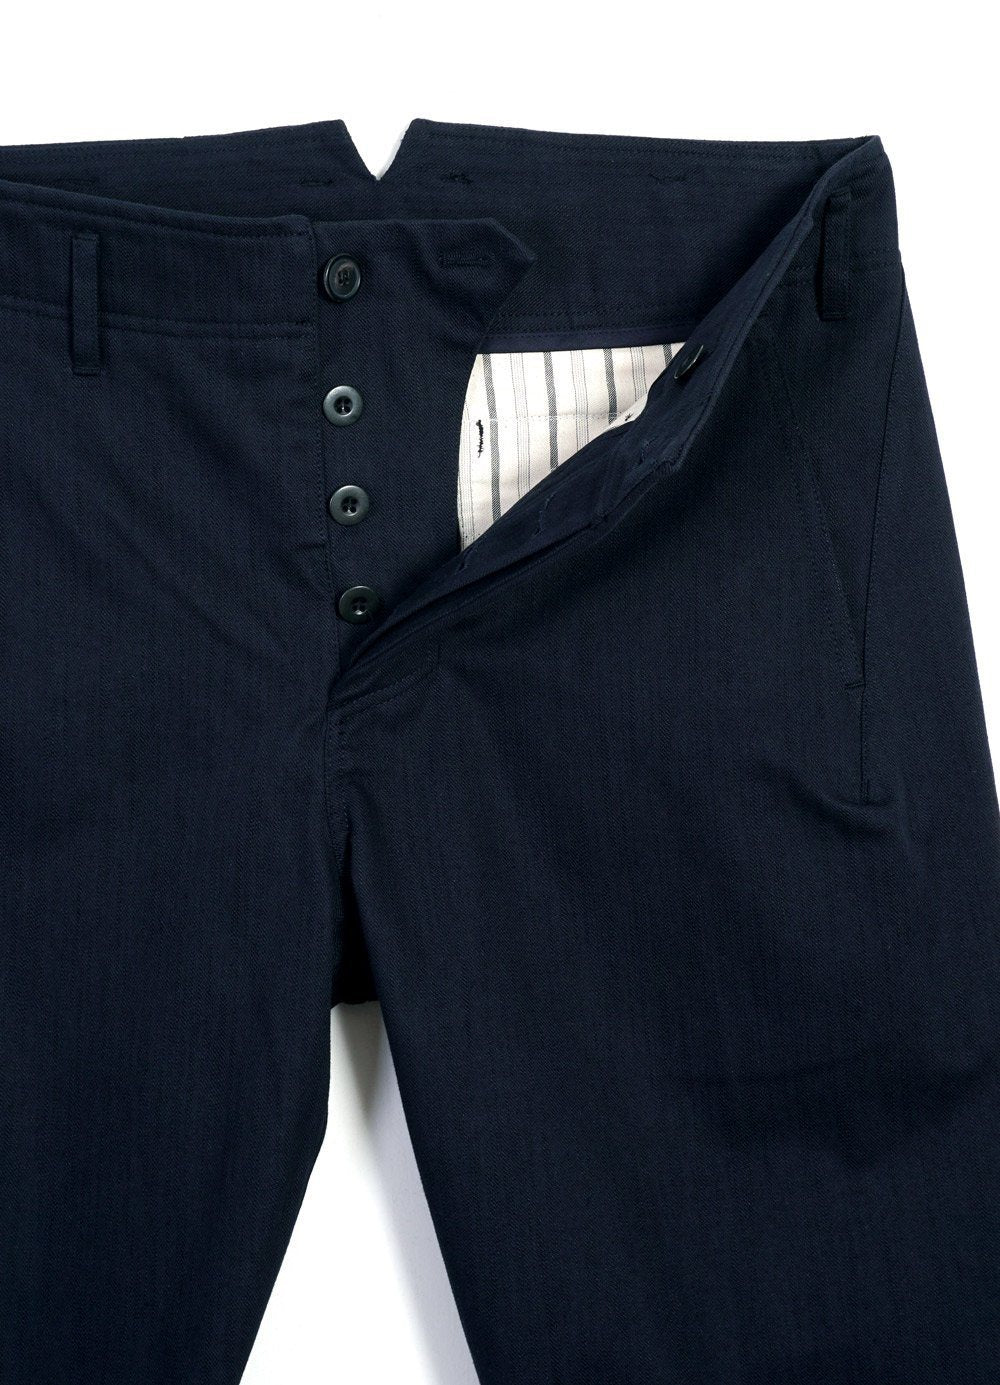 HANSEN Garments - SVENNING | Slim Fit Everyday Trousers | Navy - HANSEN Garments